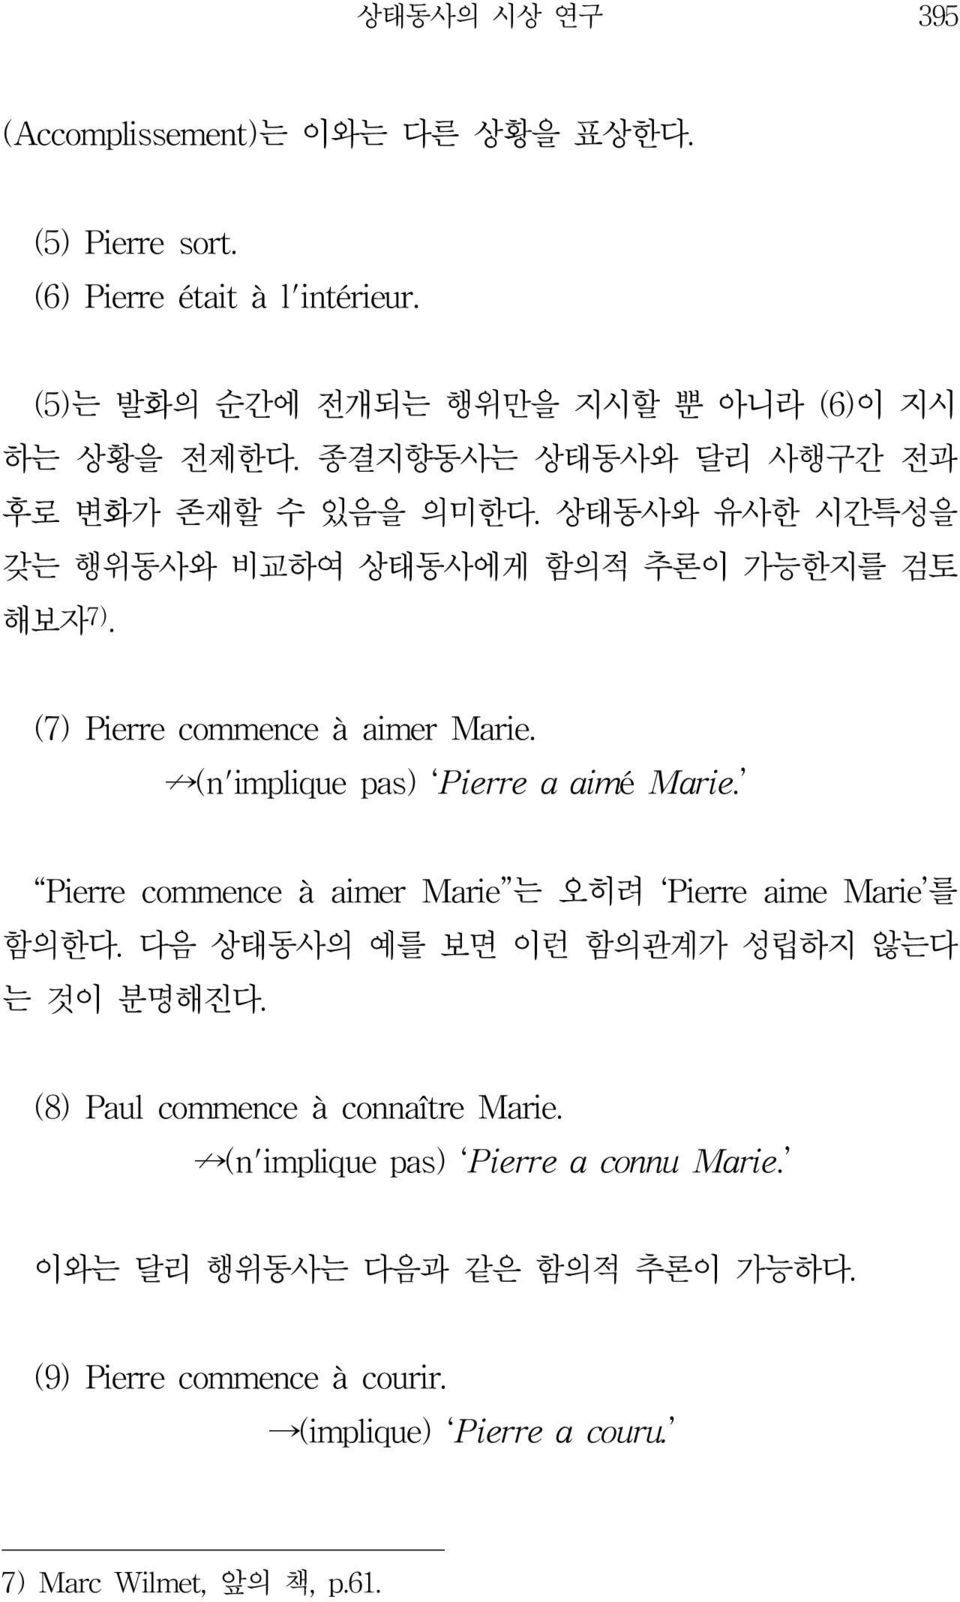 (n'implique pas) Pierre a aimé Marie. Pierre commence à aimer Marie 는 오히려 Pierre aime Marie 를 함의한다. 다음 상태동사의 예를 보면 이런 함의관계가 성립하지 않는다 는 것이 분명해진다.